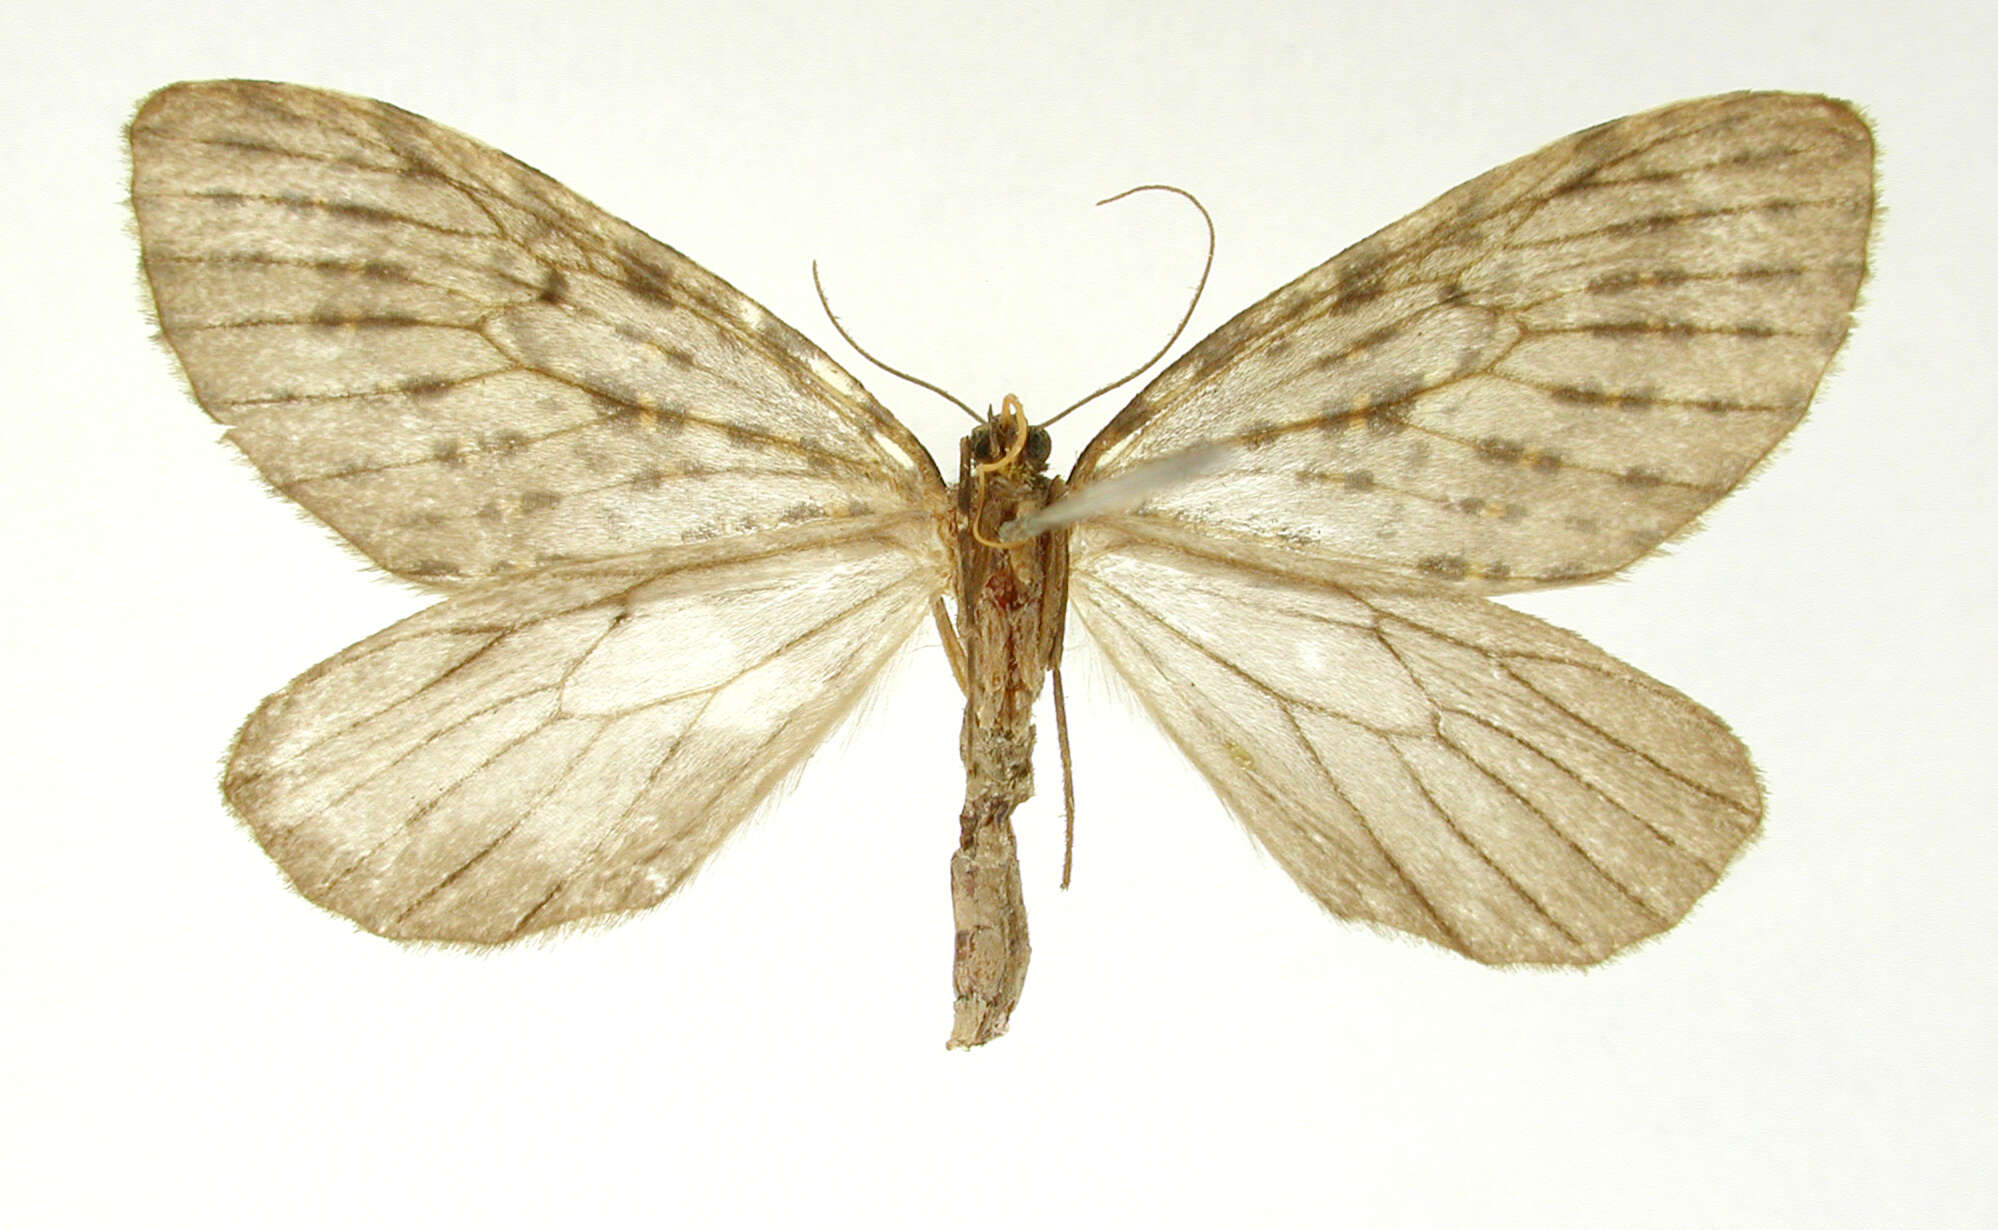 Image of Graphidipus flavifilata Dognin 1906